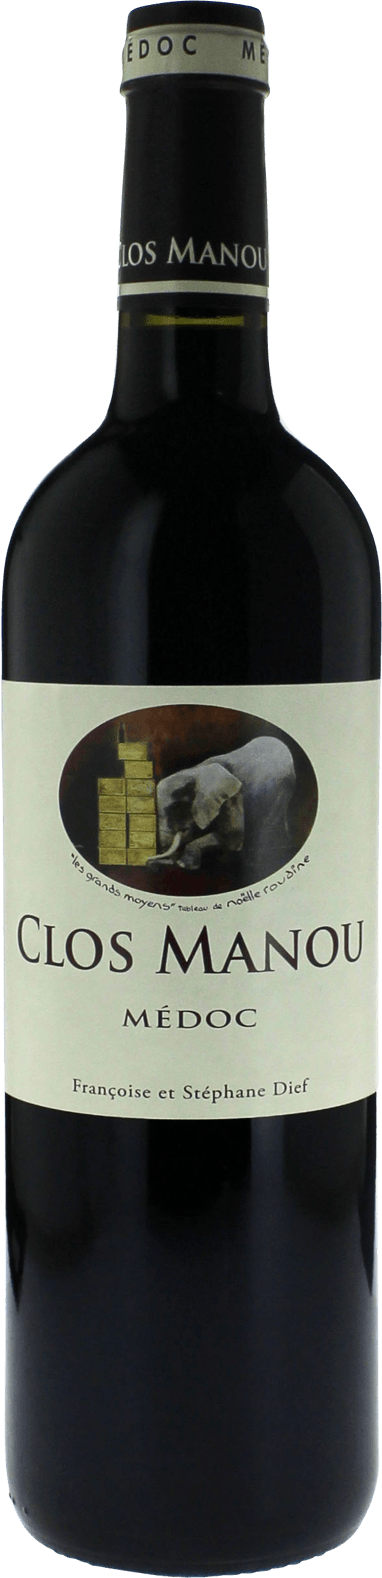 Clos manou 2016 Cru Bourgeois Mdoc, Slection Bordeaux Rouge